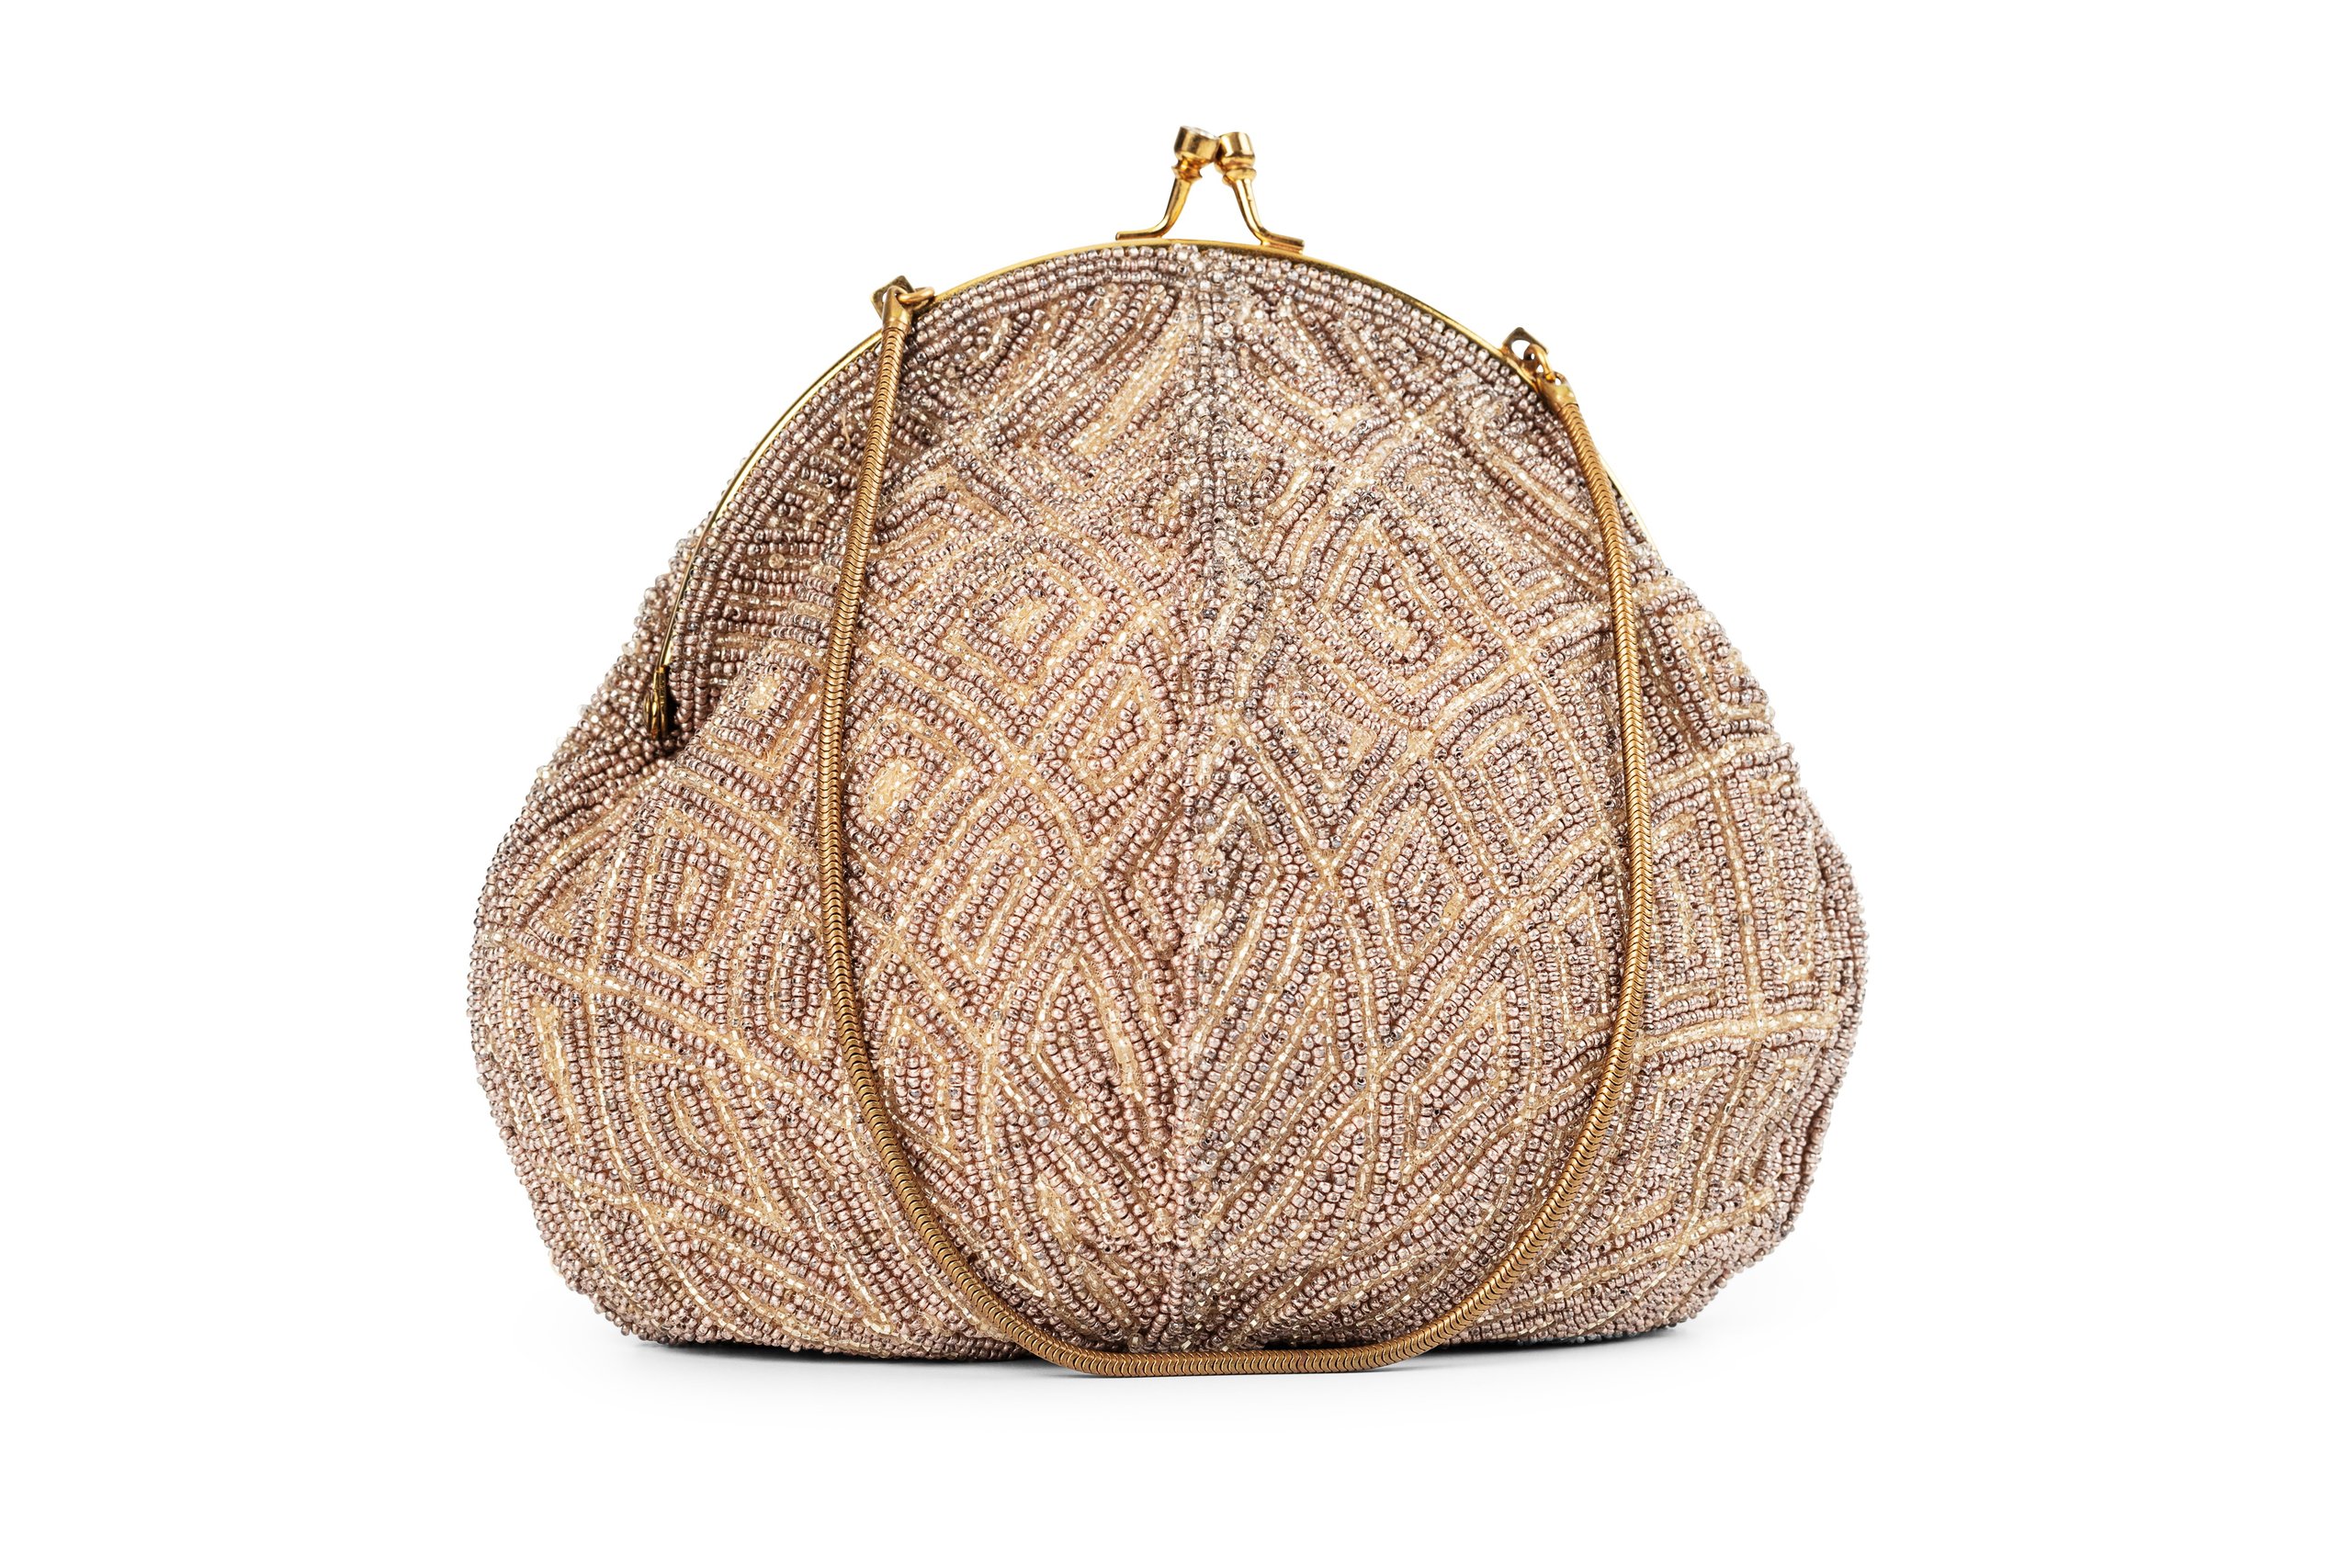 Evening bag used by Mrs V Richards